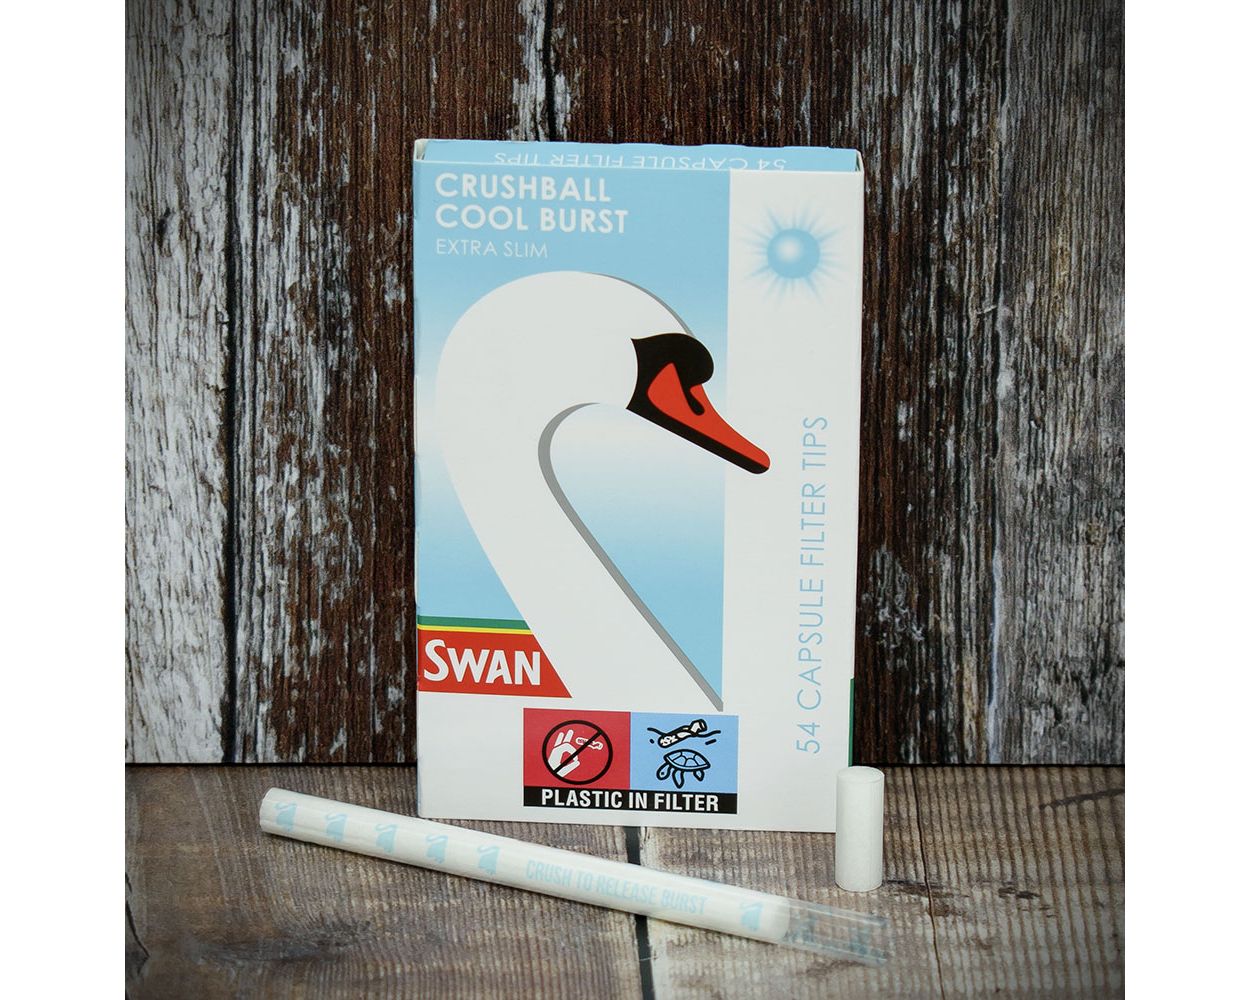 Swan Cool Burst Menthol Extra Slim Crushball Filter Tips (5mm) - 54 Pack